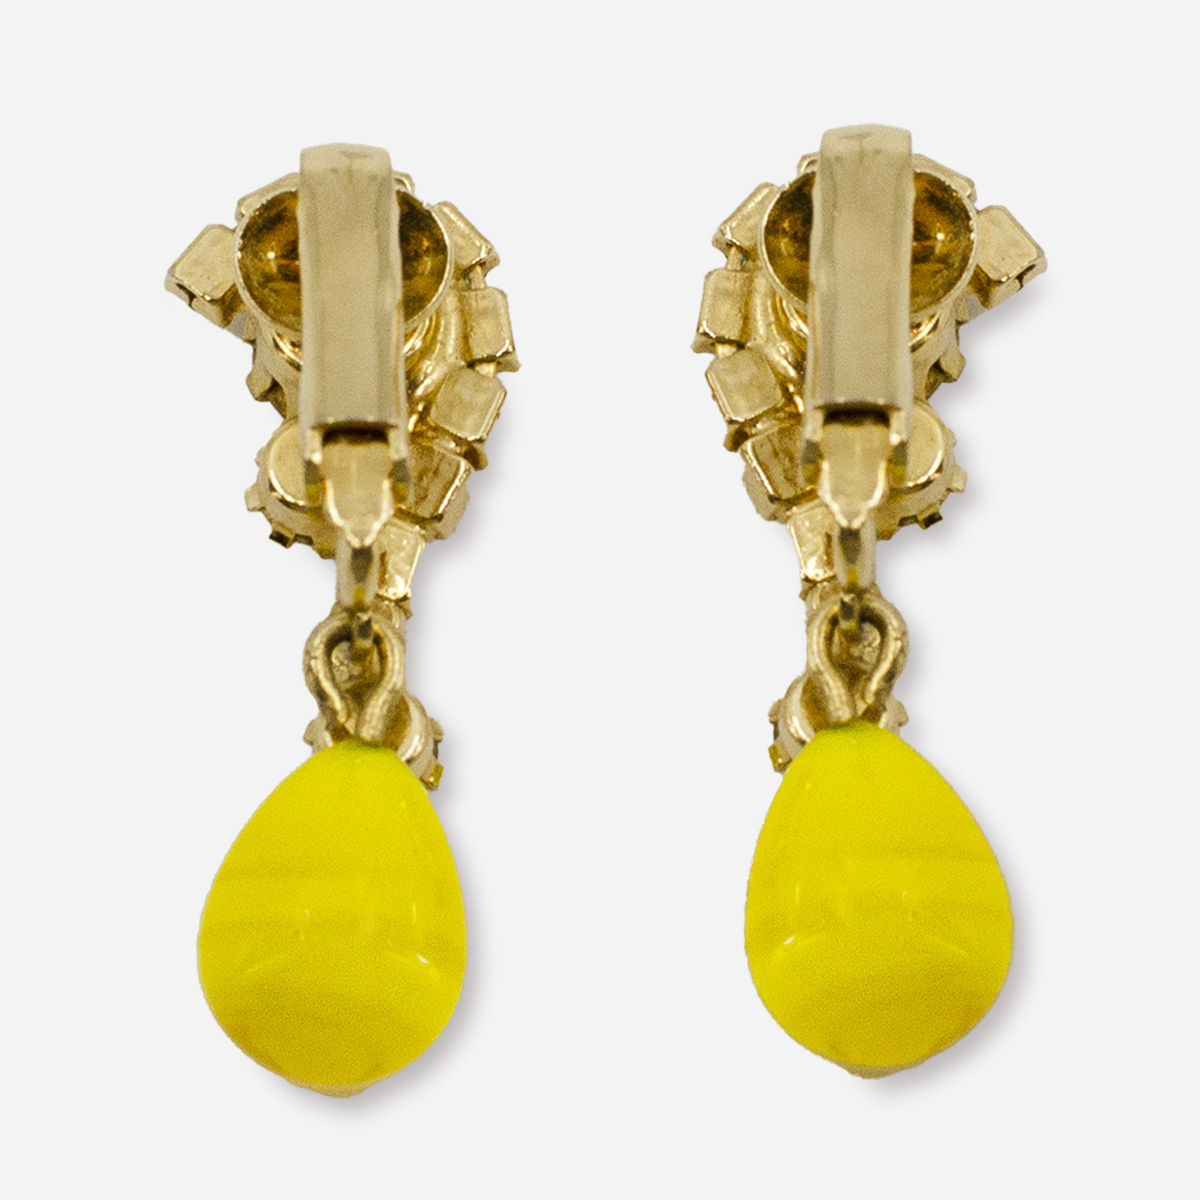 Striated yellow glass beads